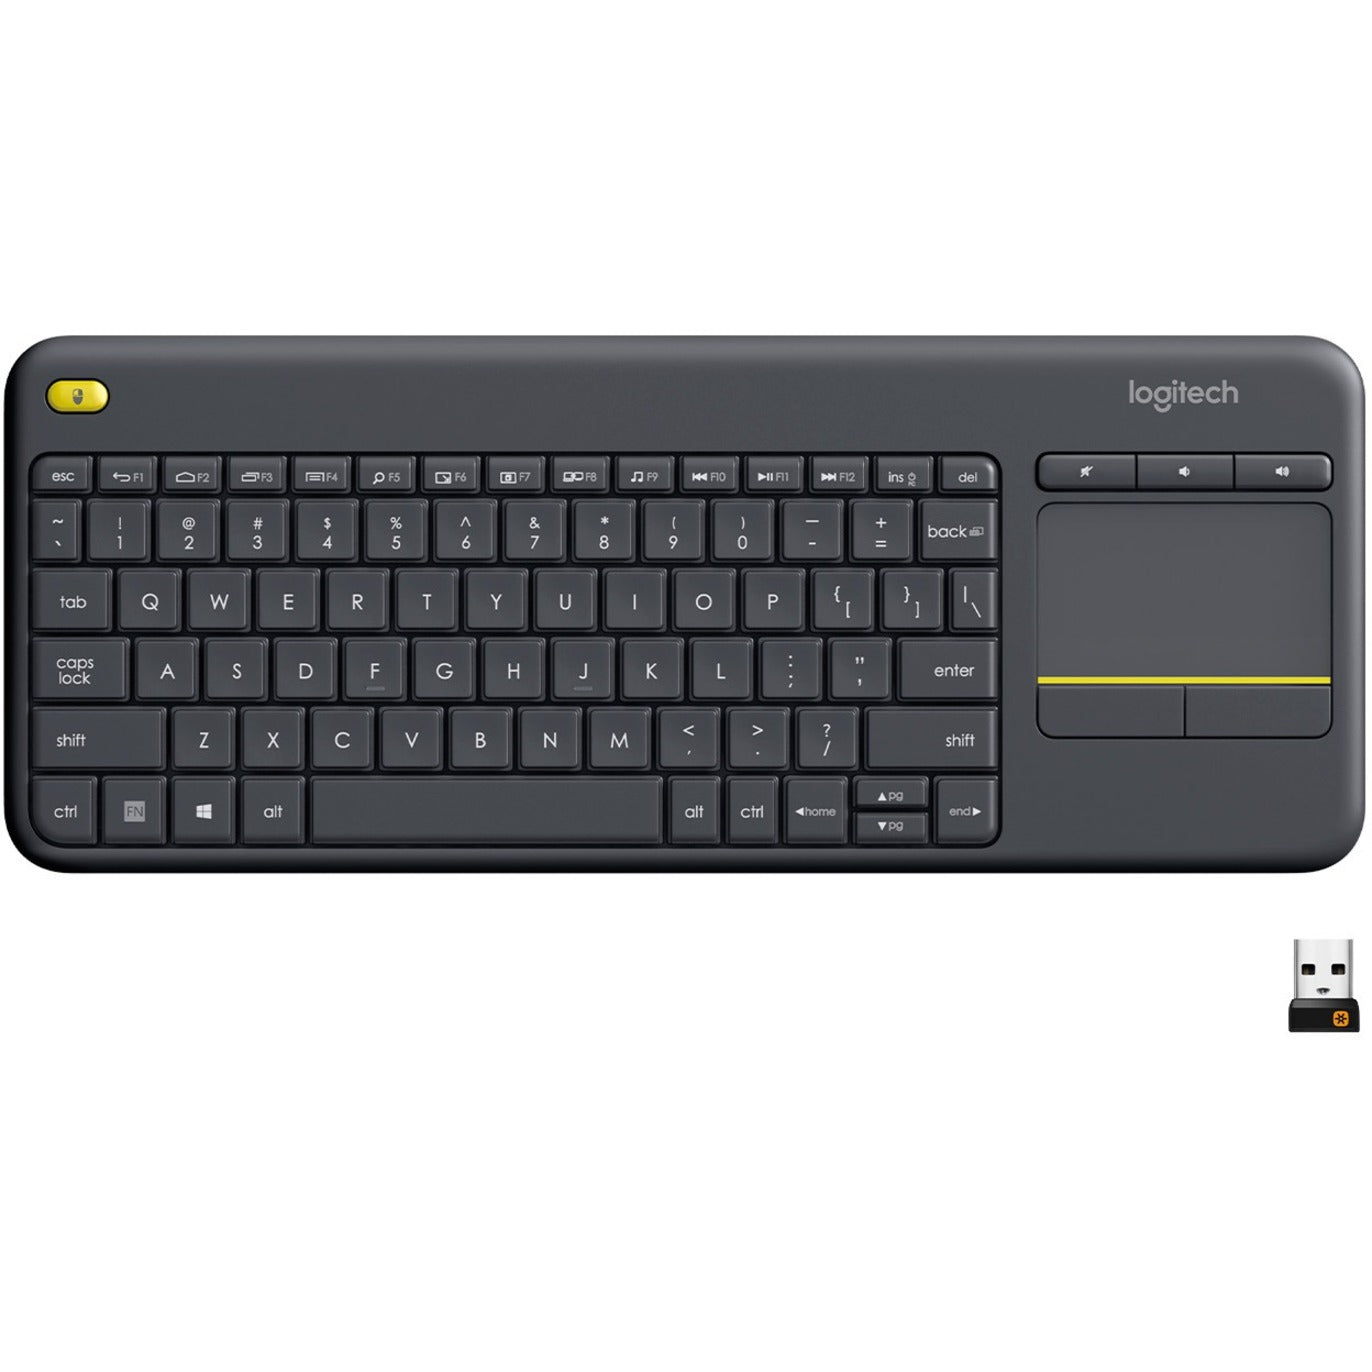 Logitech 920-007119 K400 Plus Touchpad Wireless Keyboard, Black - Volume Control, QWERTY Layout